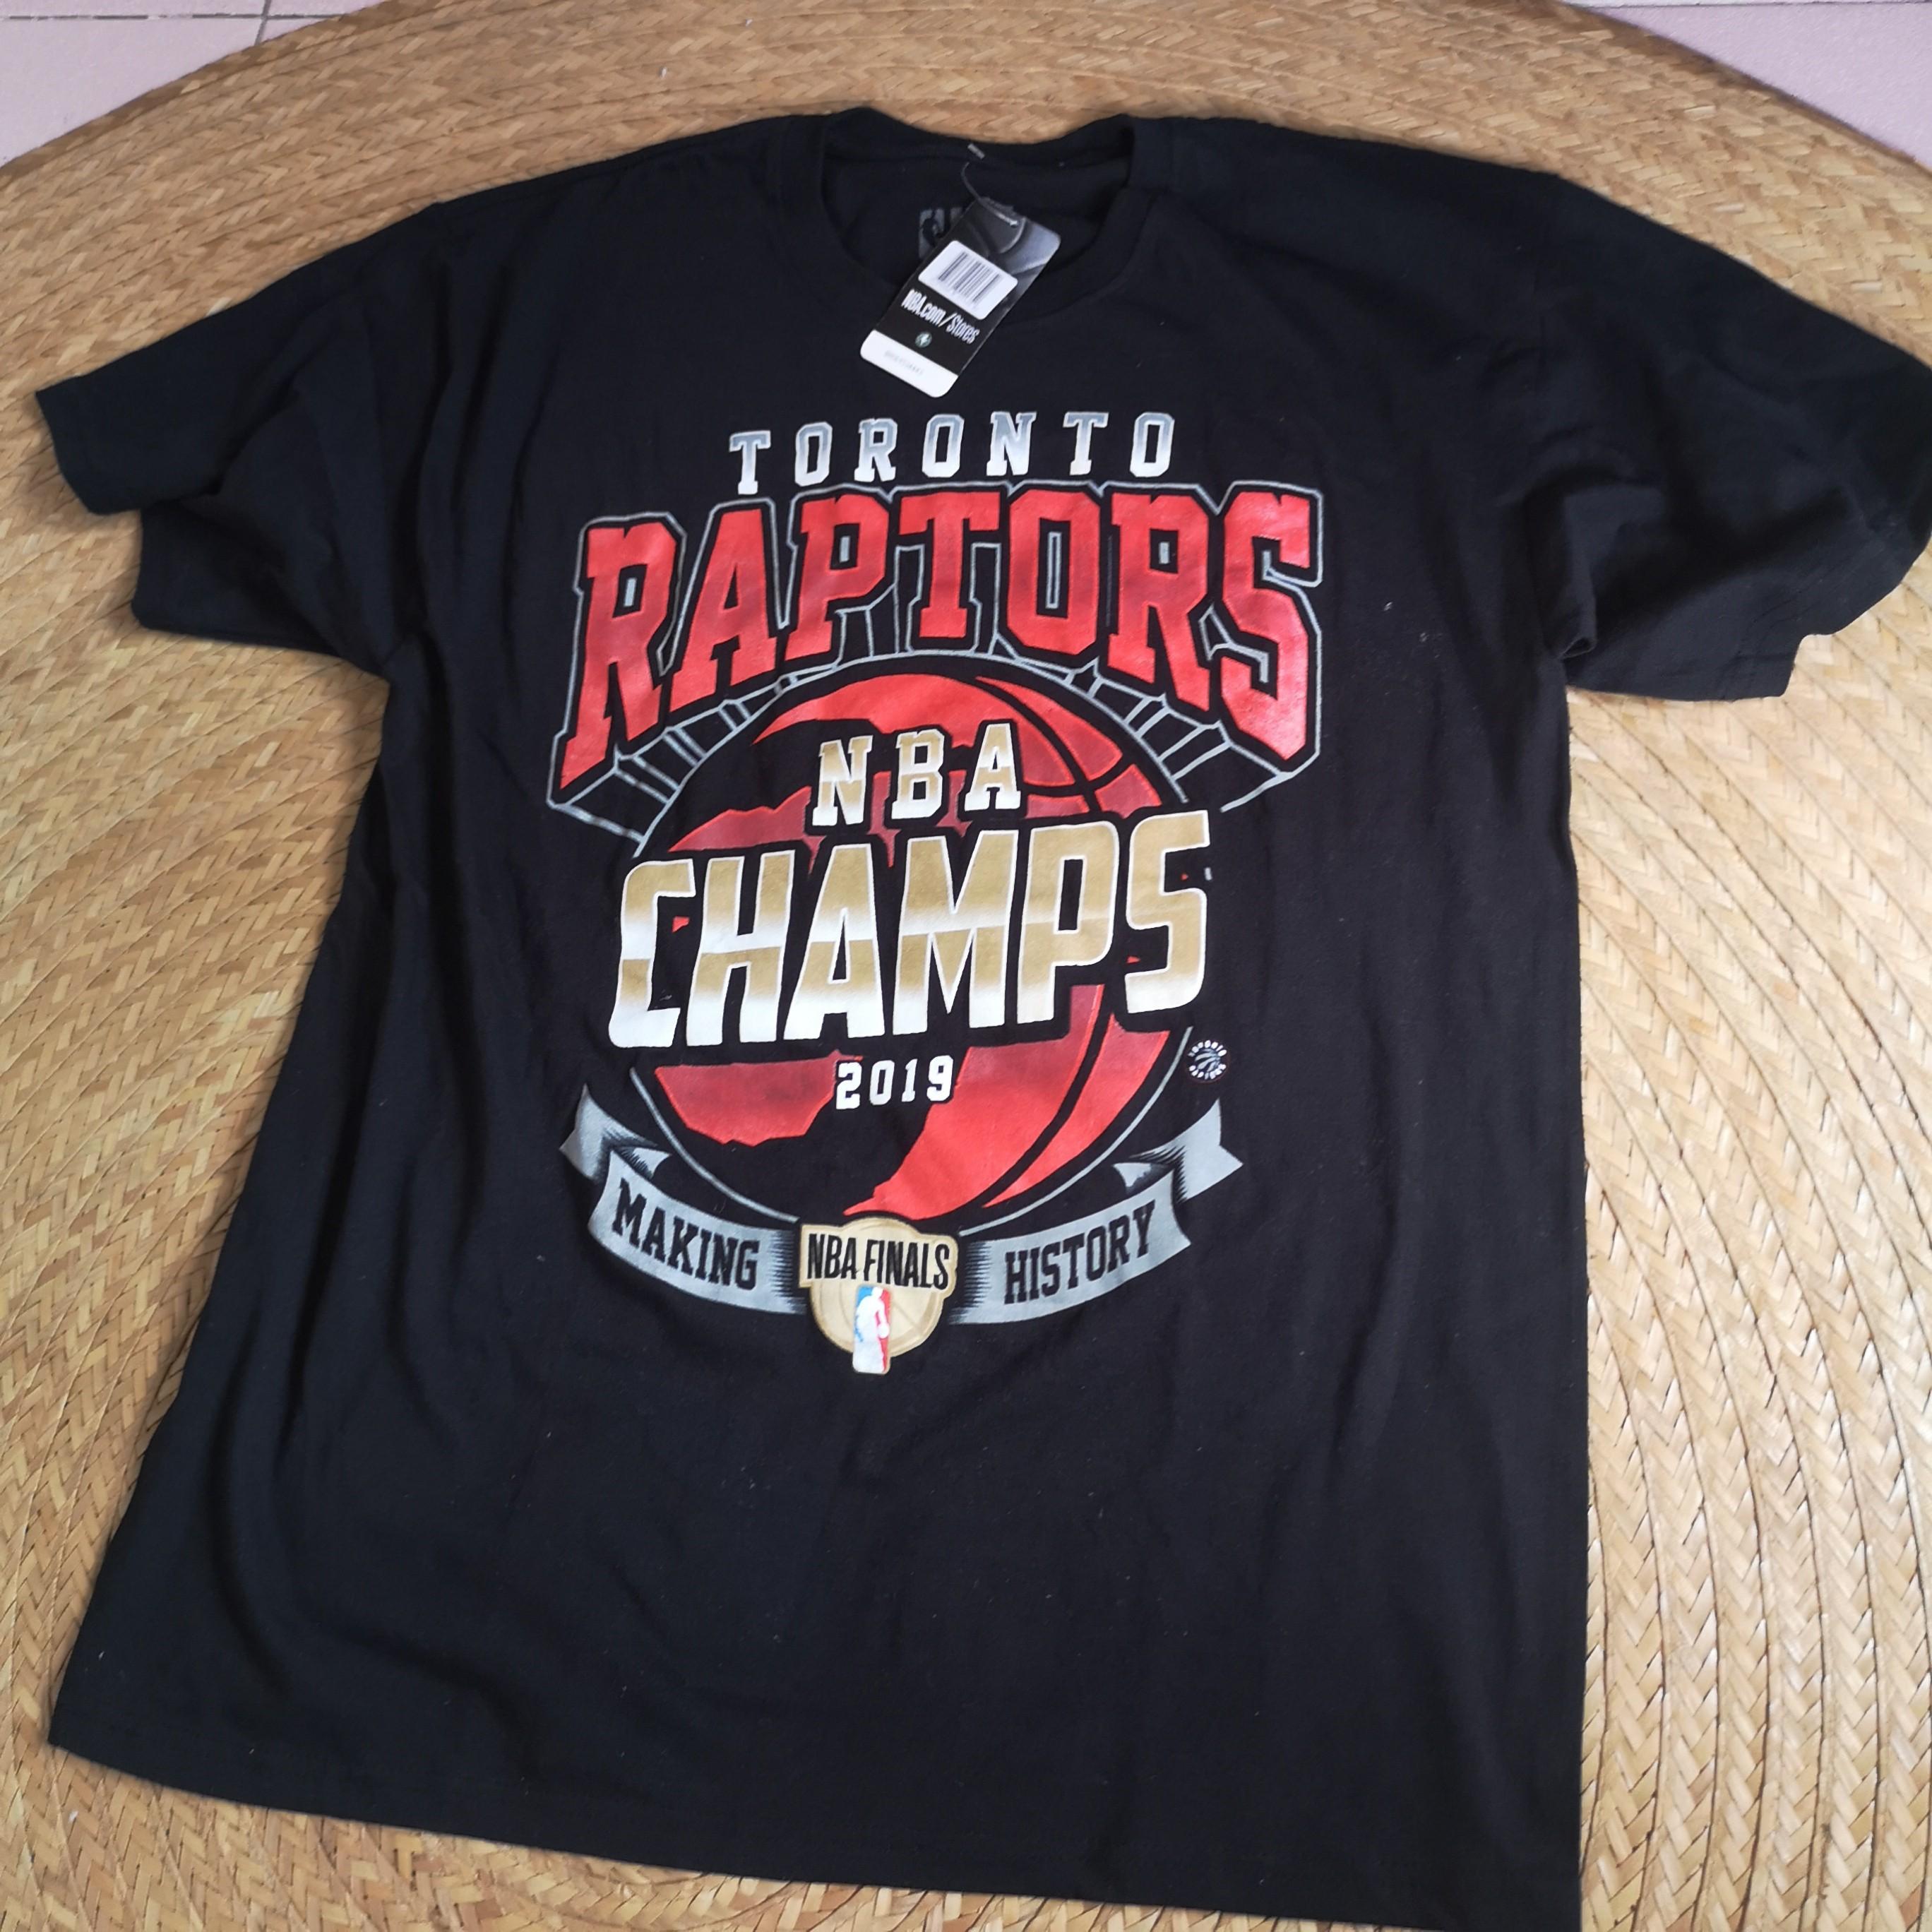  Toronto Raptors Championship Shirt